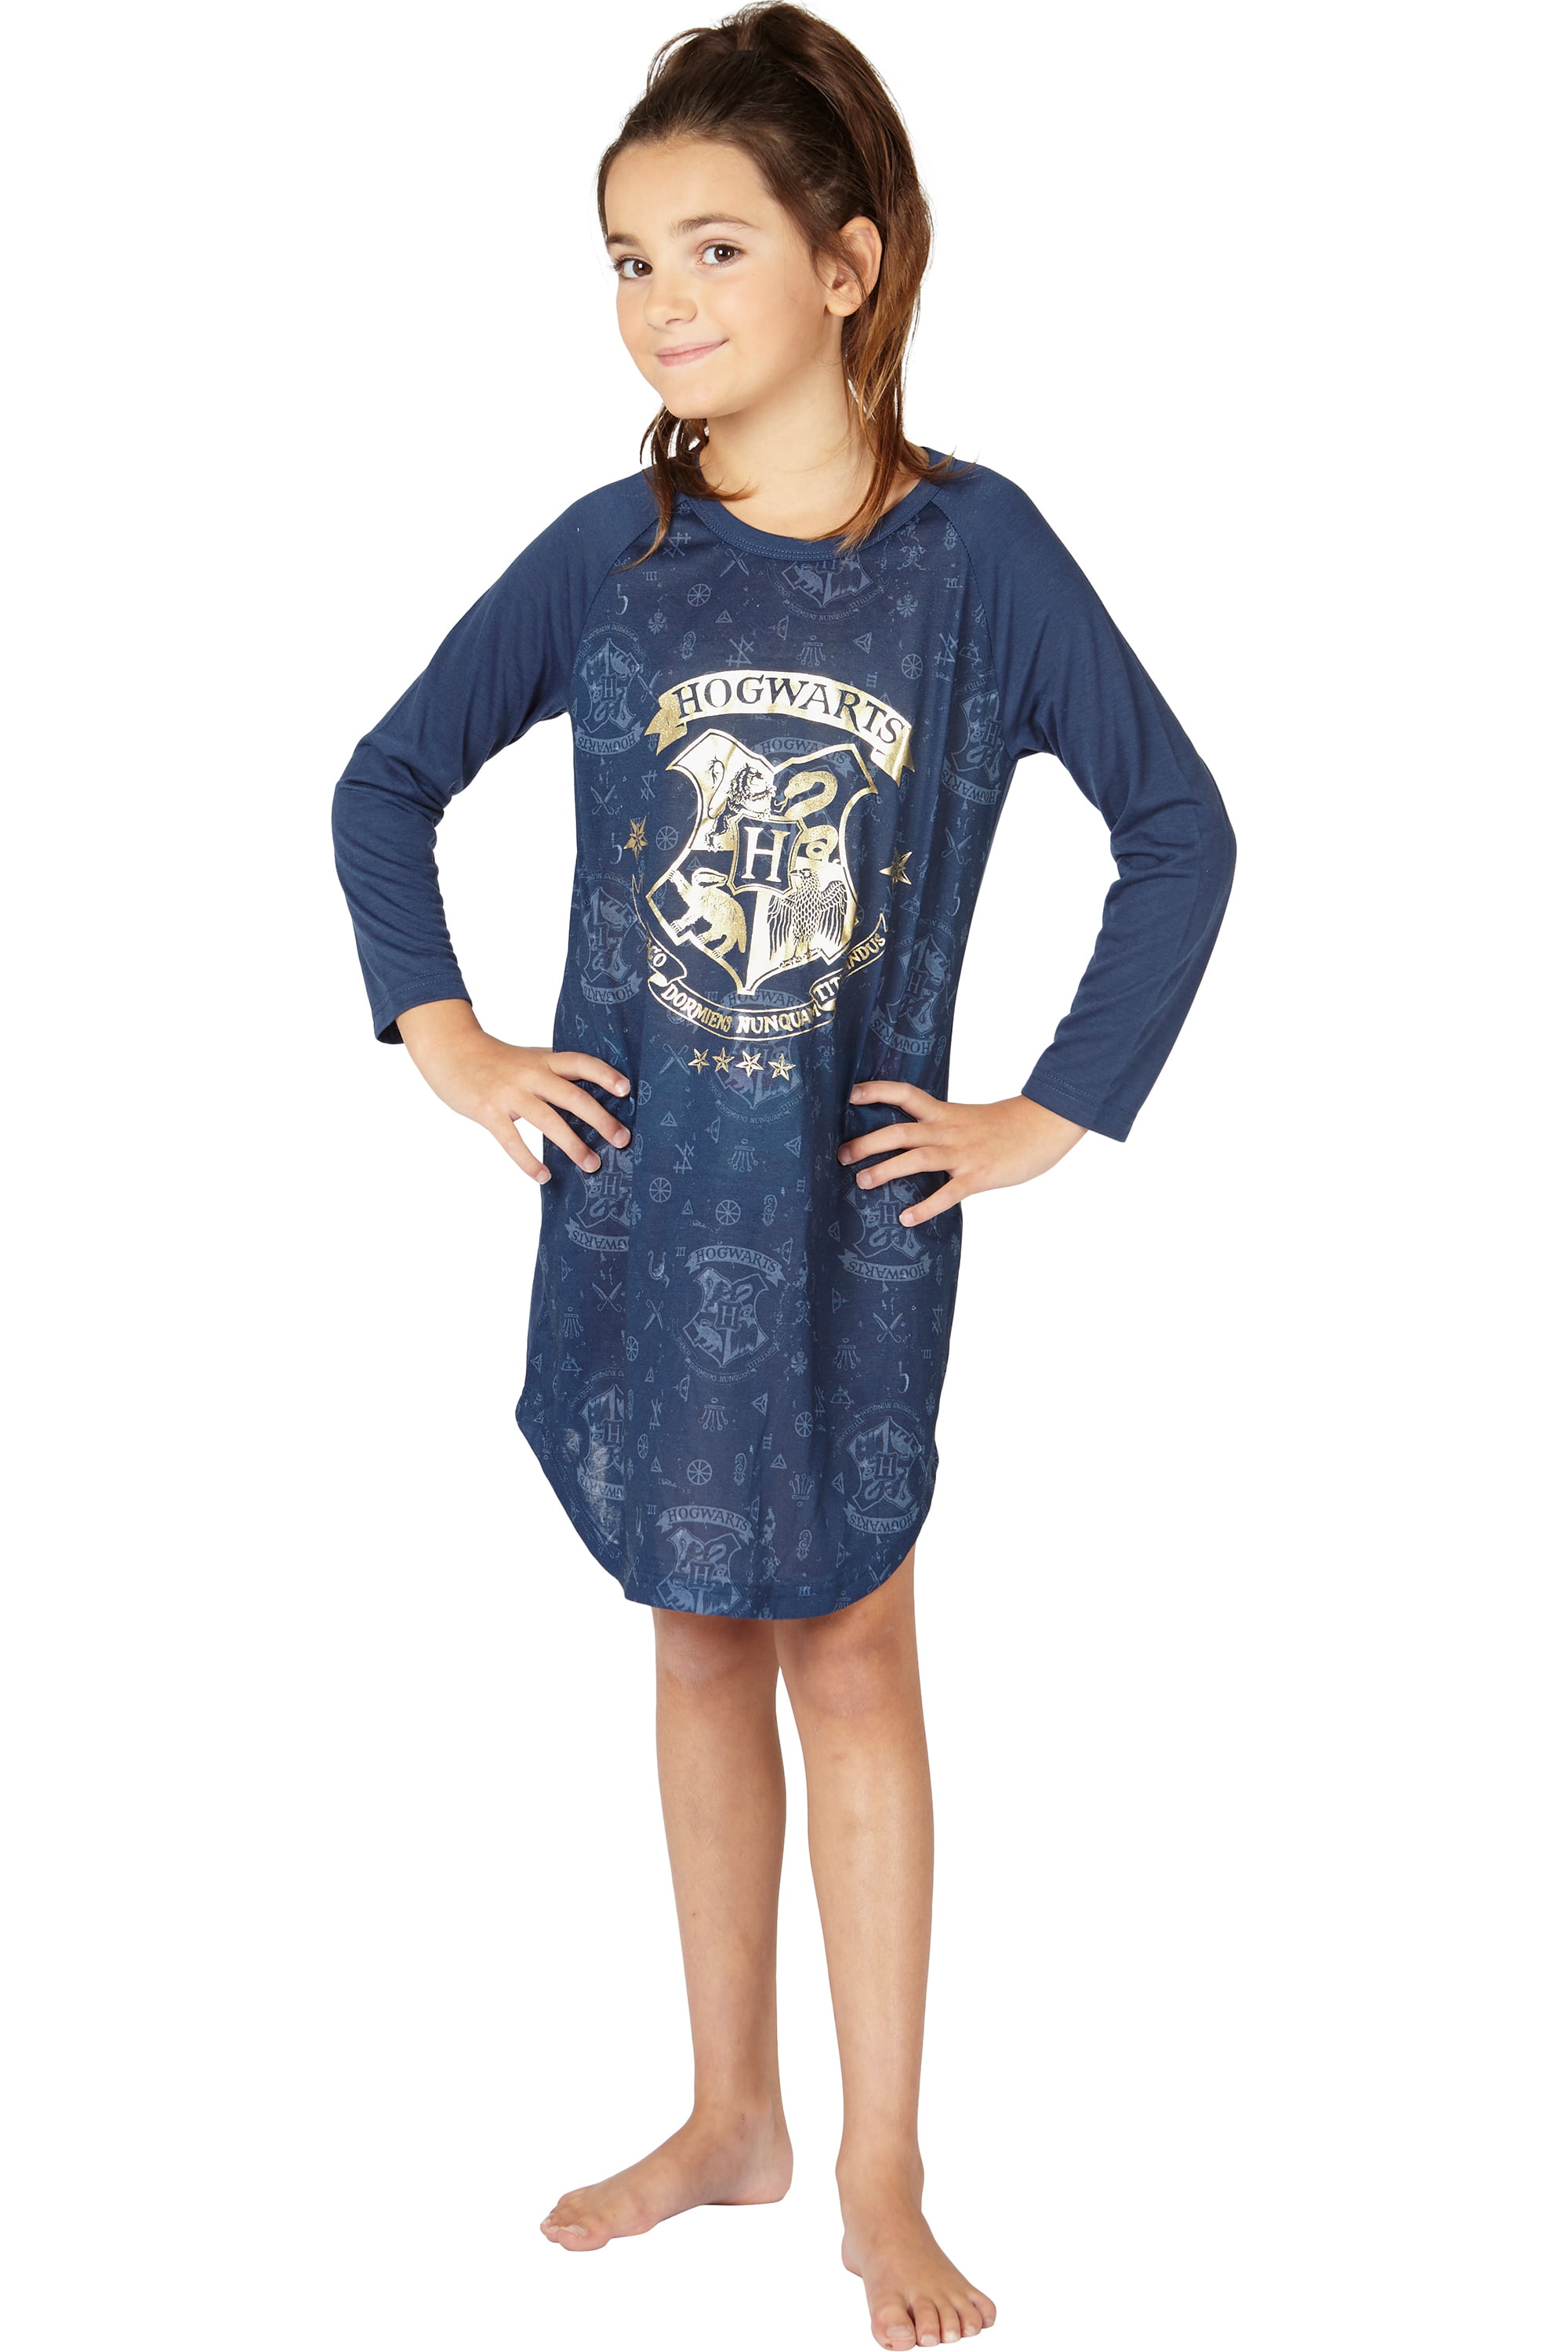 AME Sleepwear Girls/' Harry Potter Hogwarts Crest Nightgown